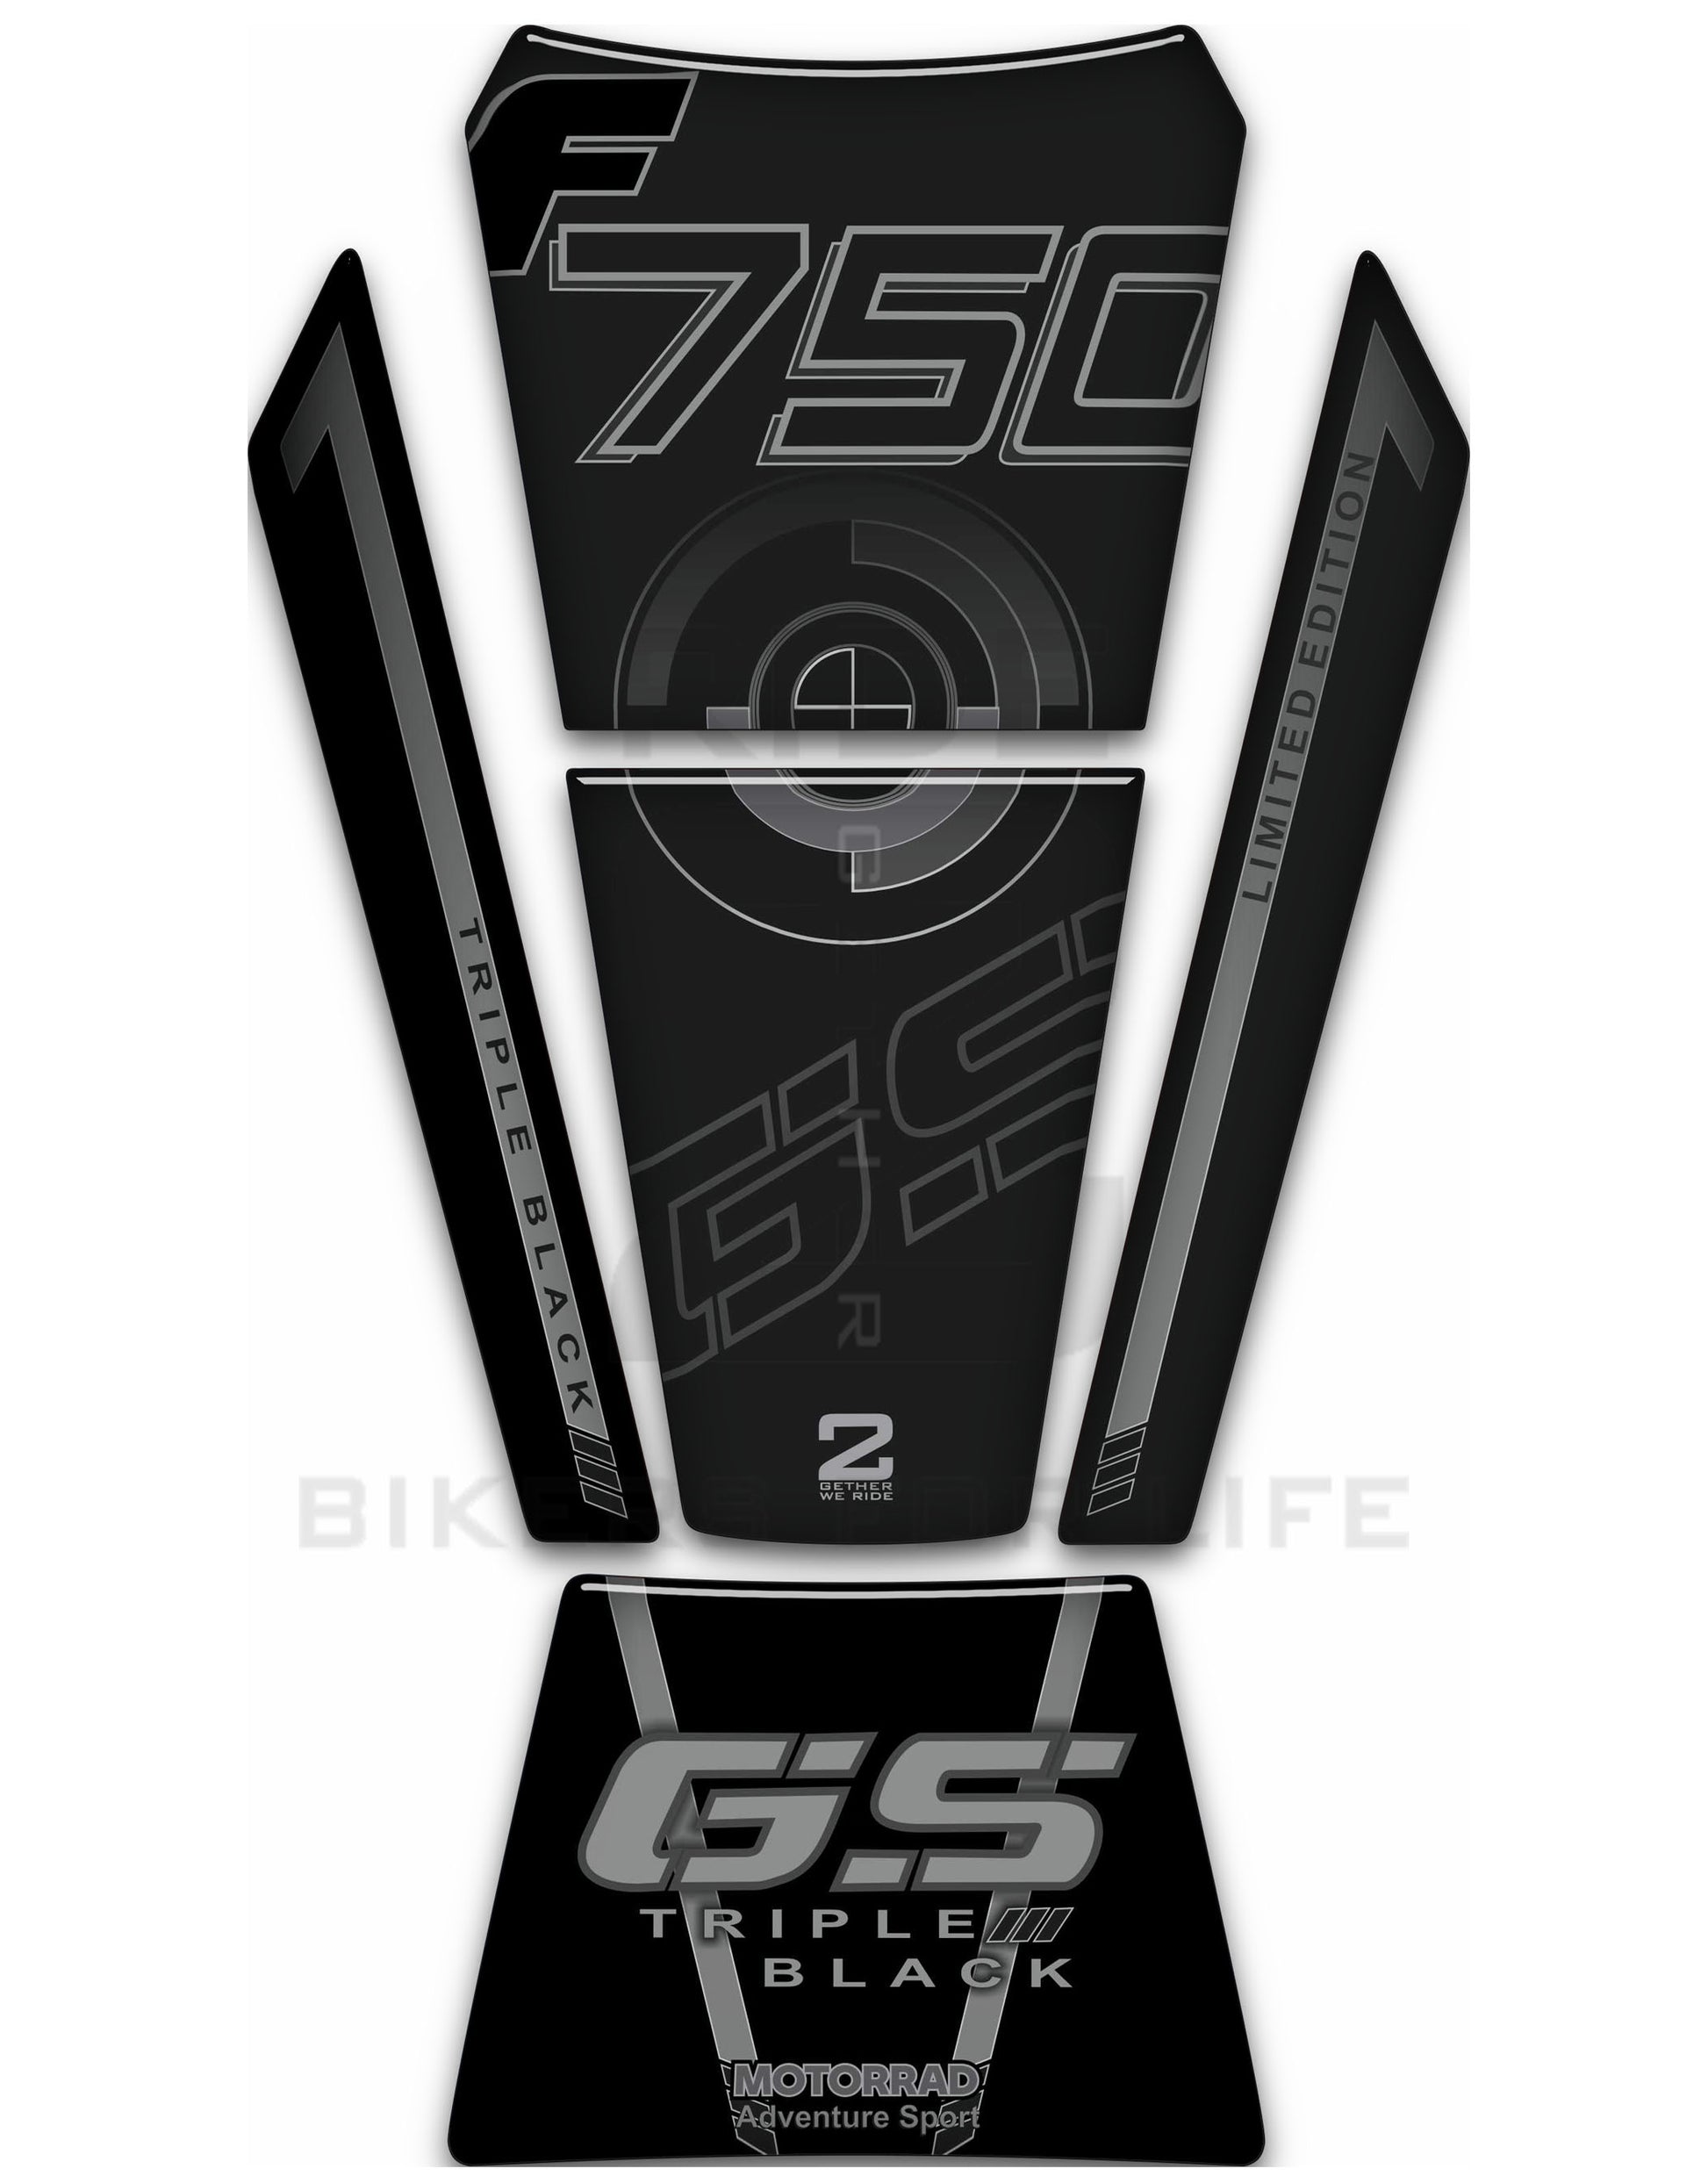 BMW F 750 GS Triple Black Motor Bike Tank Pad / Protector